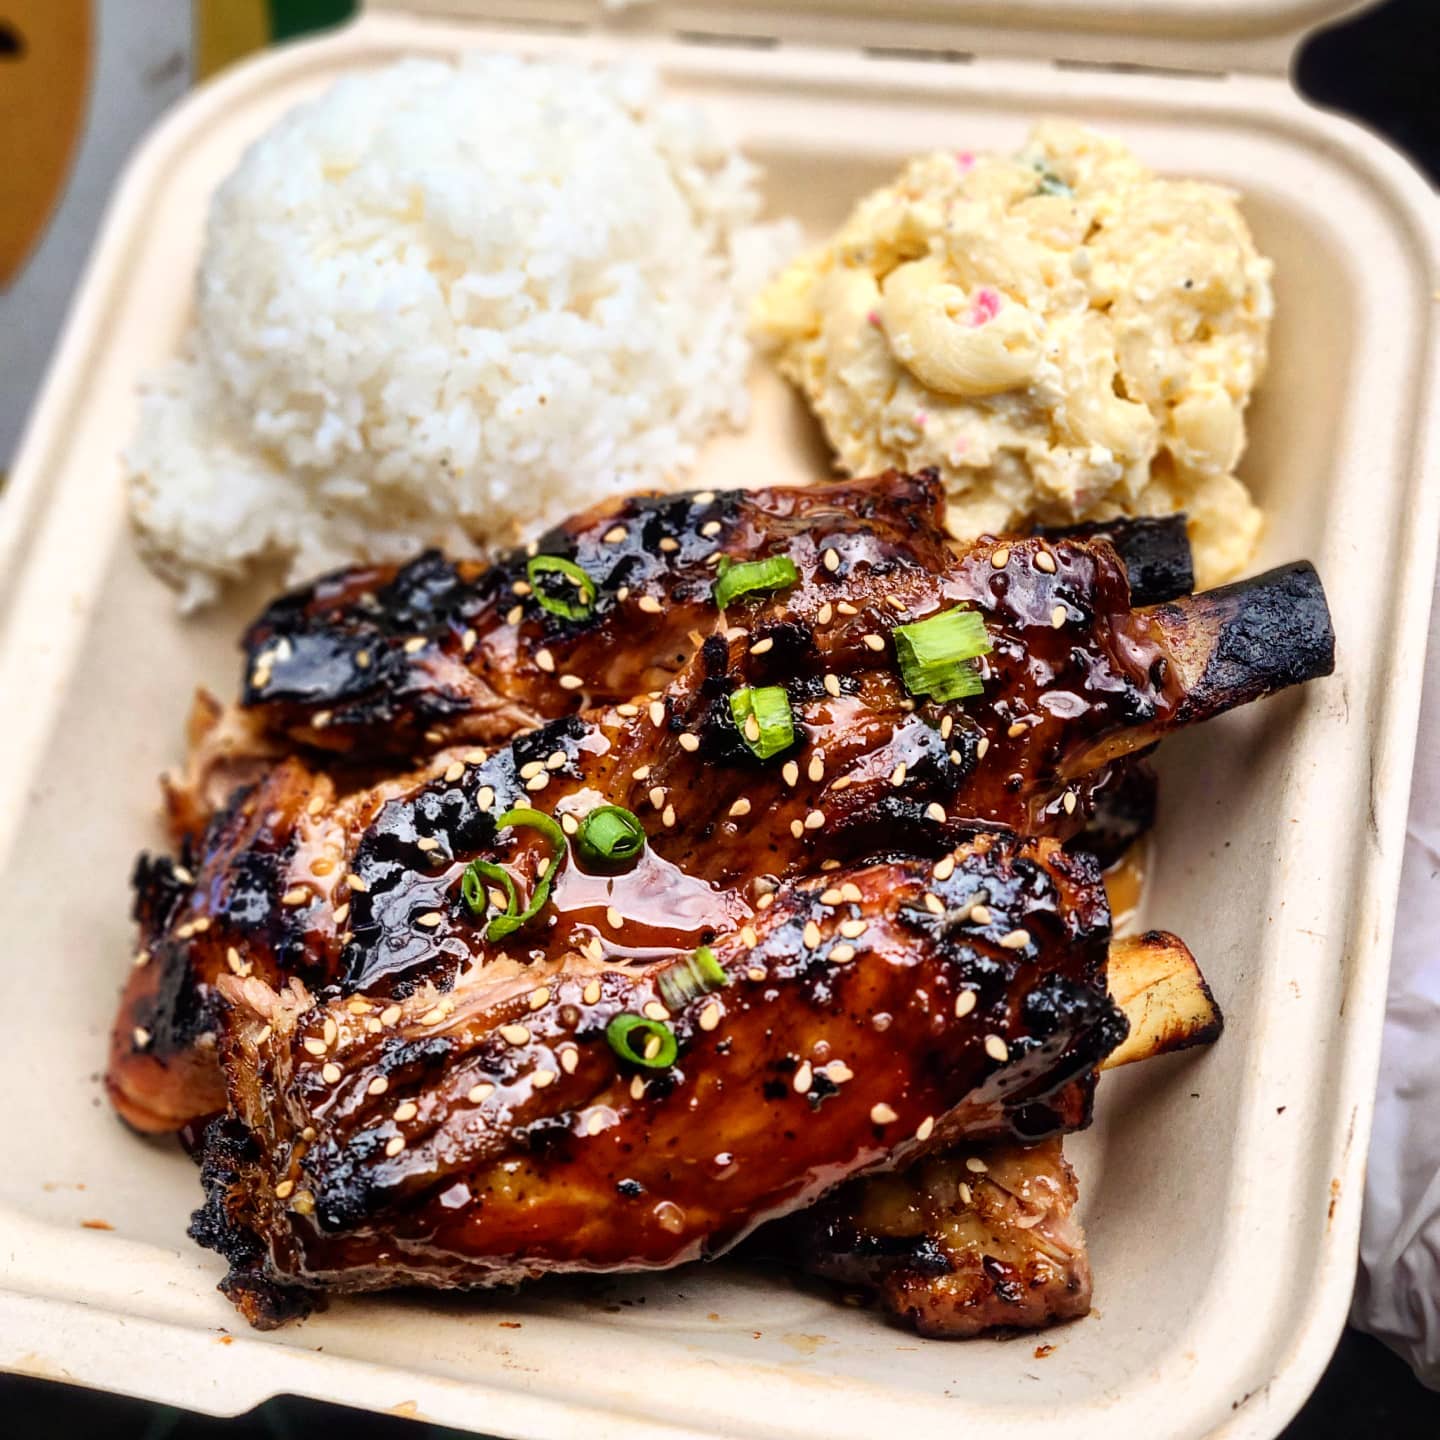 Hawaiian-style ribs served with rice and macaroni salad, a specialty at Kealoha's BBQ.